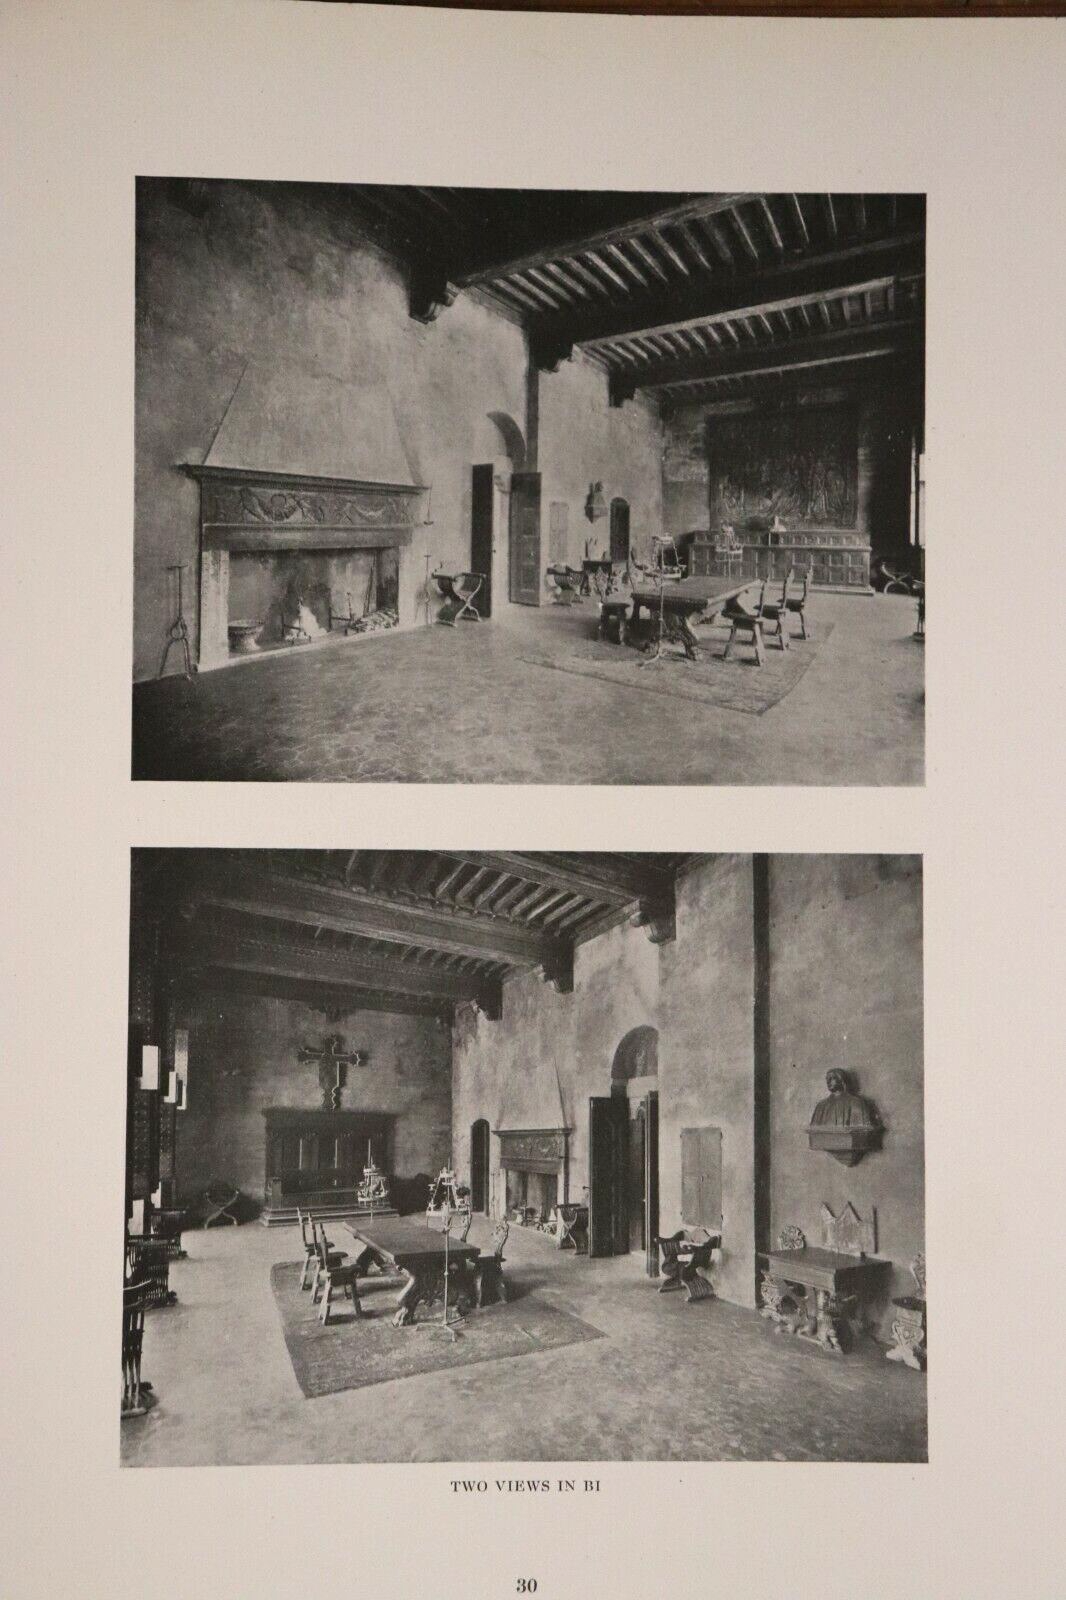 1922 The Davanzati Palace by L.C. Rosenberg Antique Architecture Reference Book